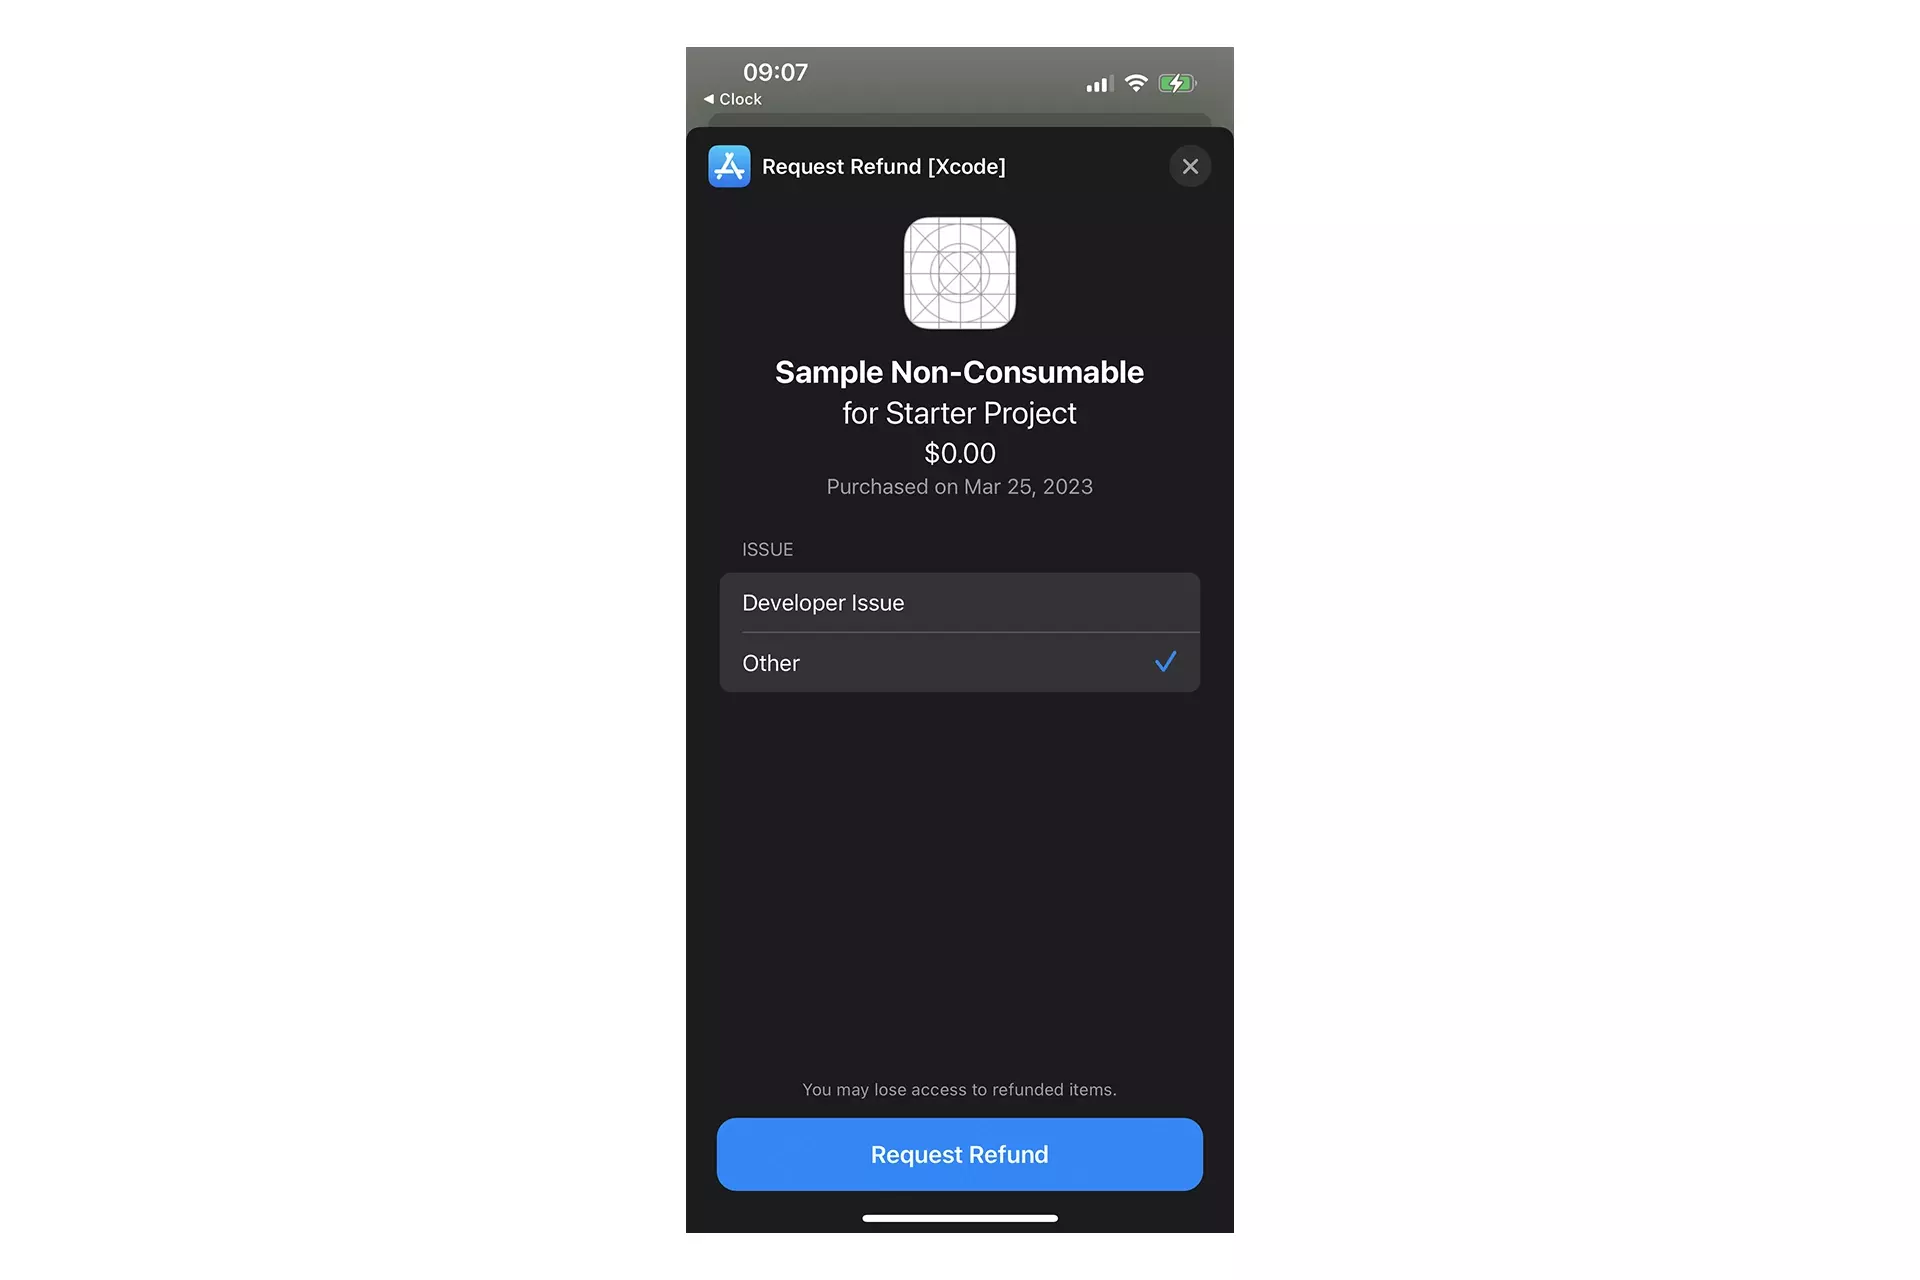 A screenshot of the Refund UI in an iOS app when you begin a refund request.